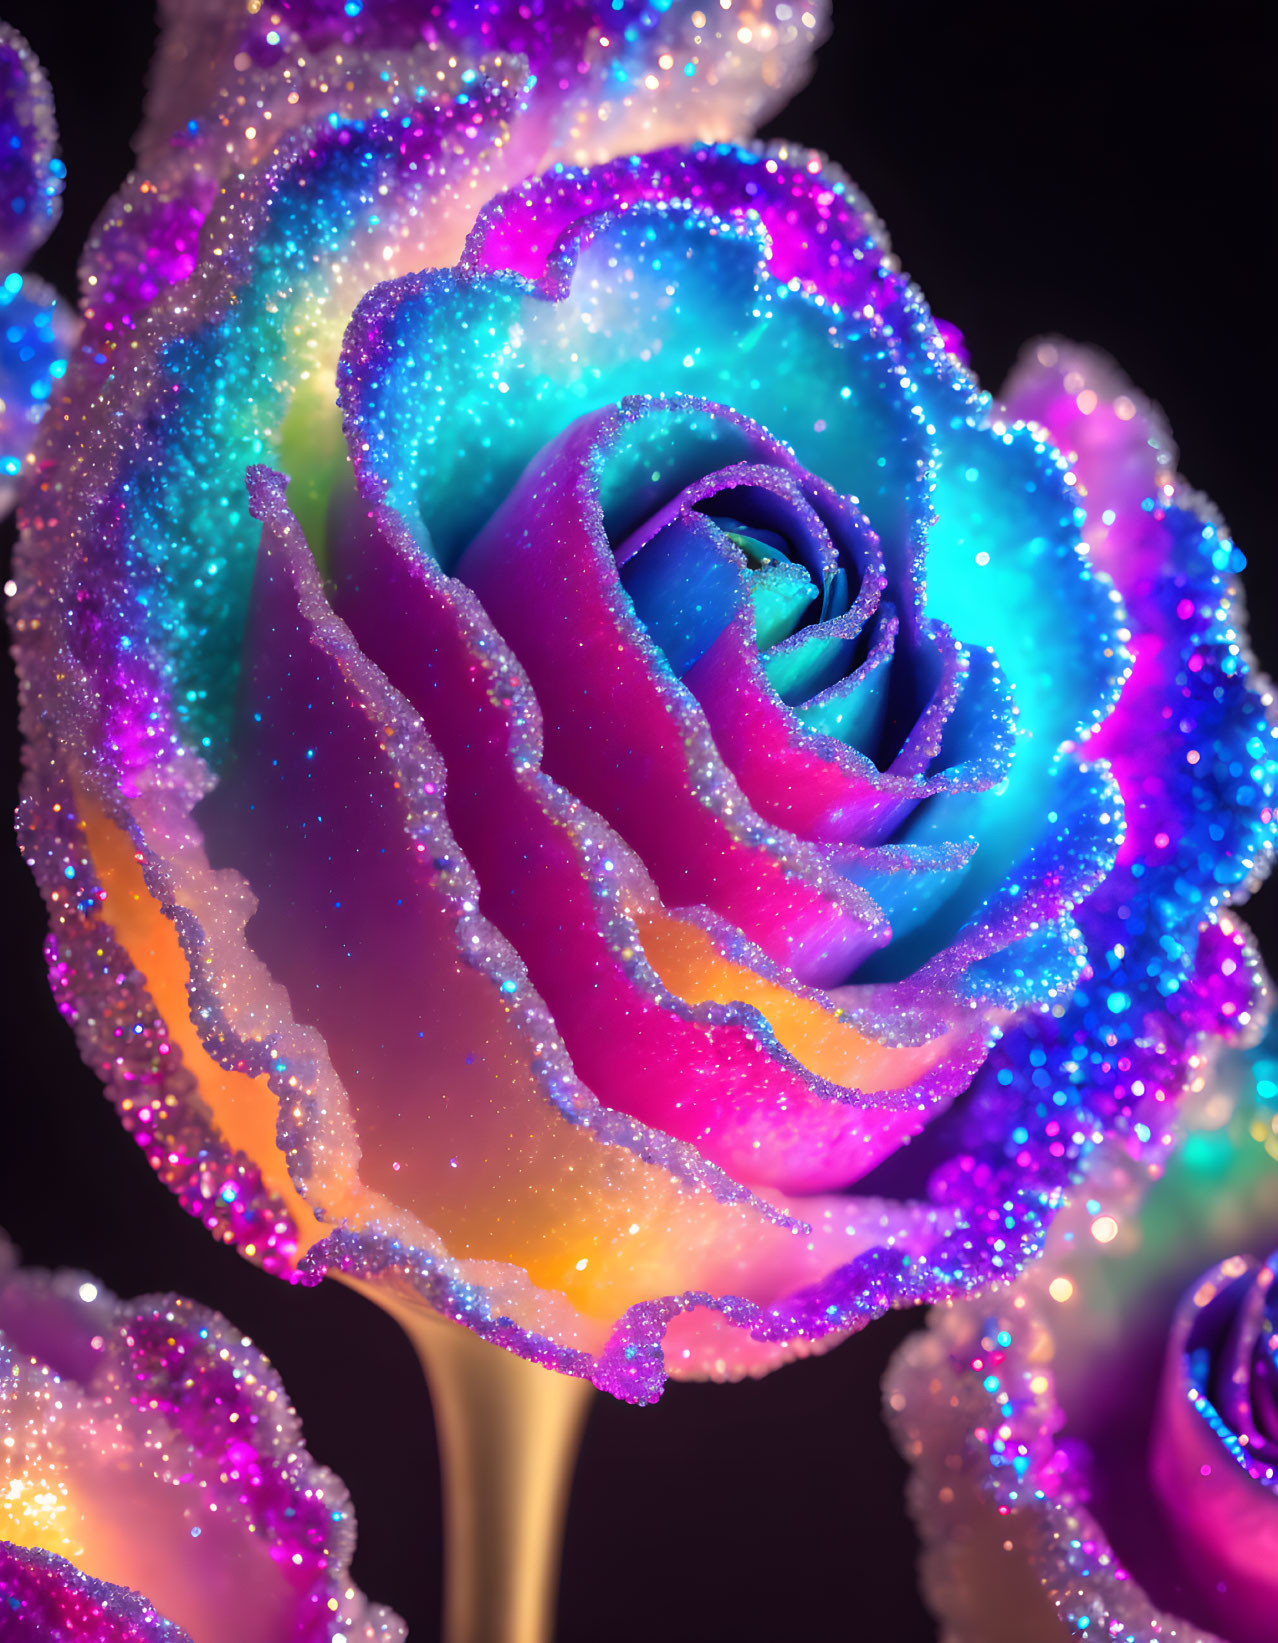 Crystalized Rose